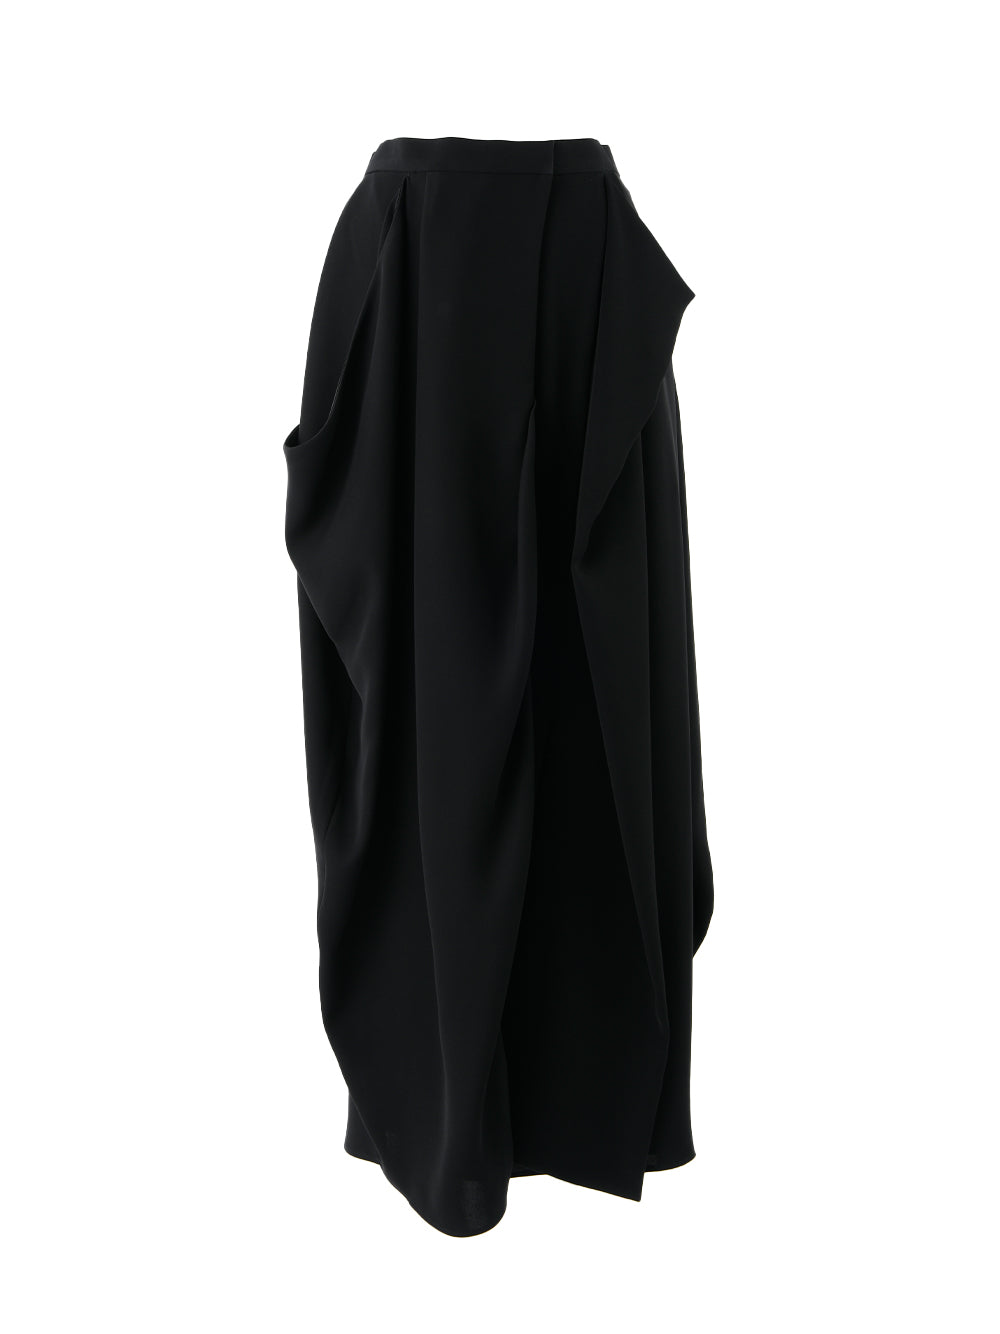 Draped Cocoon Skirt (Black)